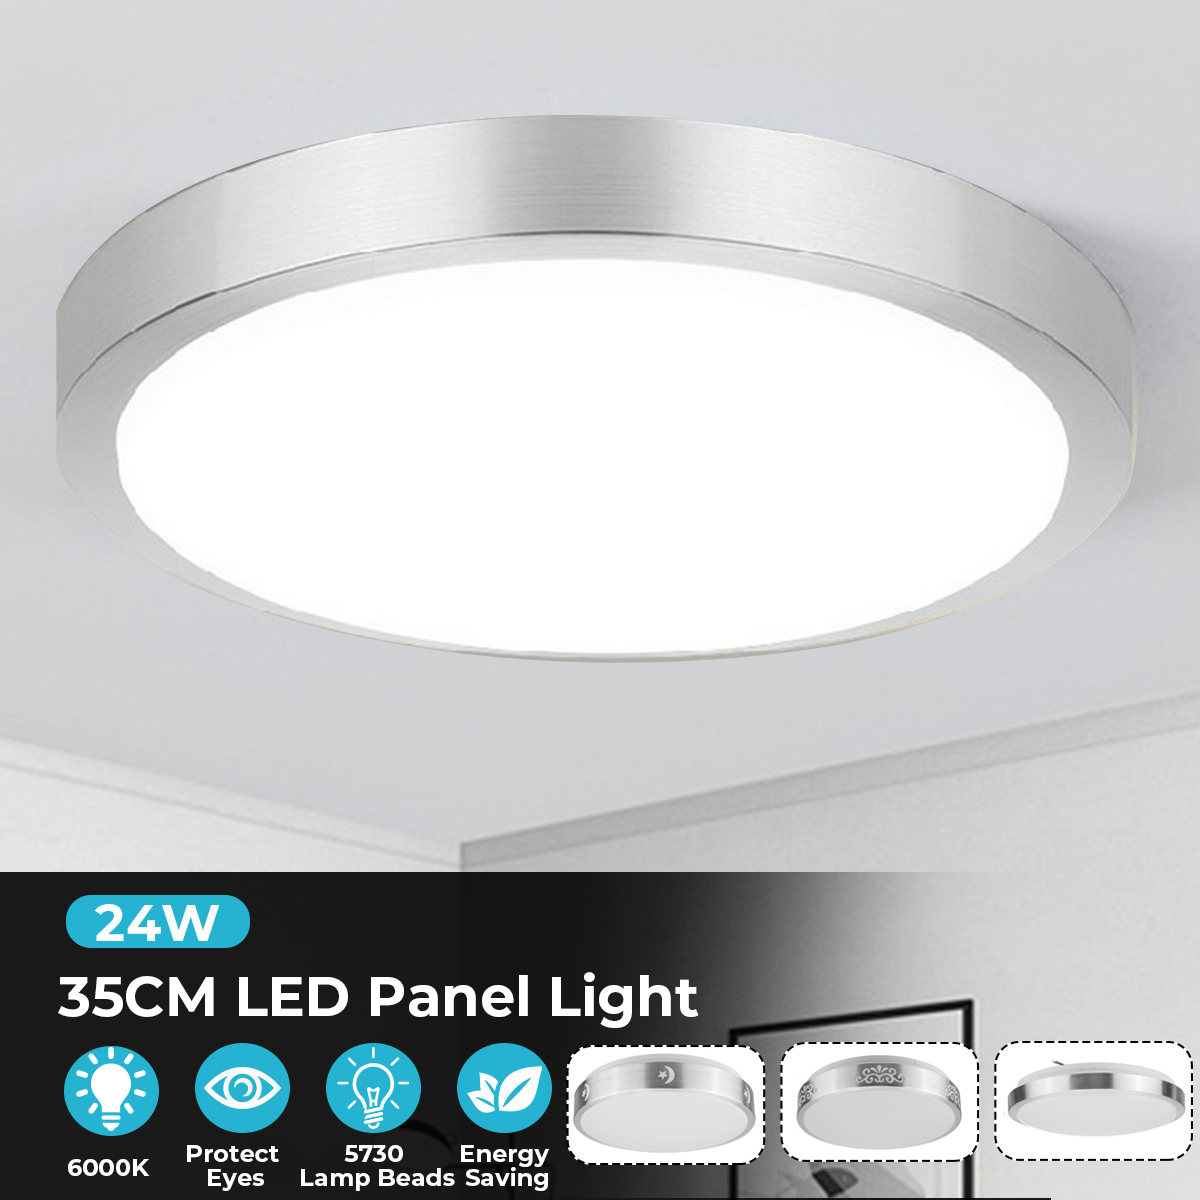 LED-Panel-Light-220V-24W-Protect-Eyes-Save-Energy-for-Home-1775150-1